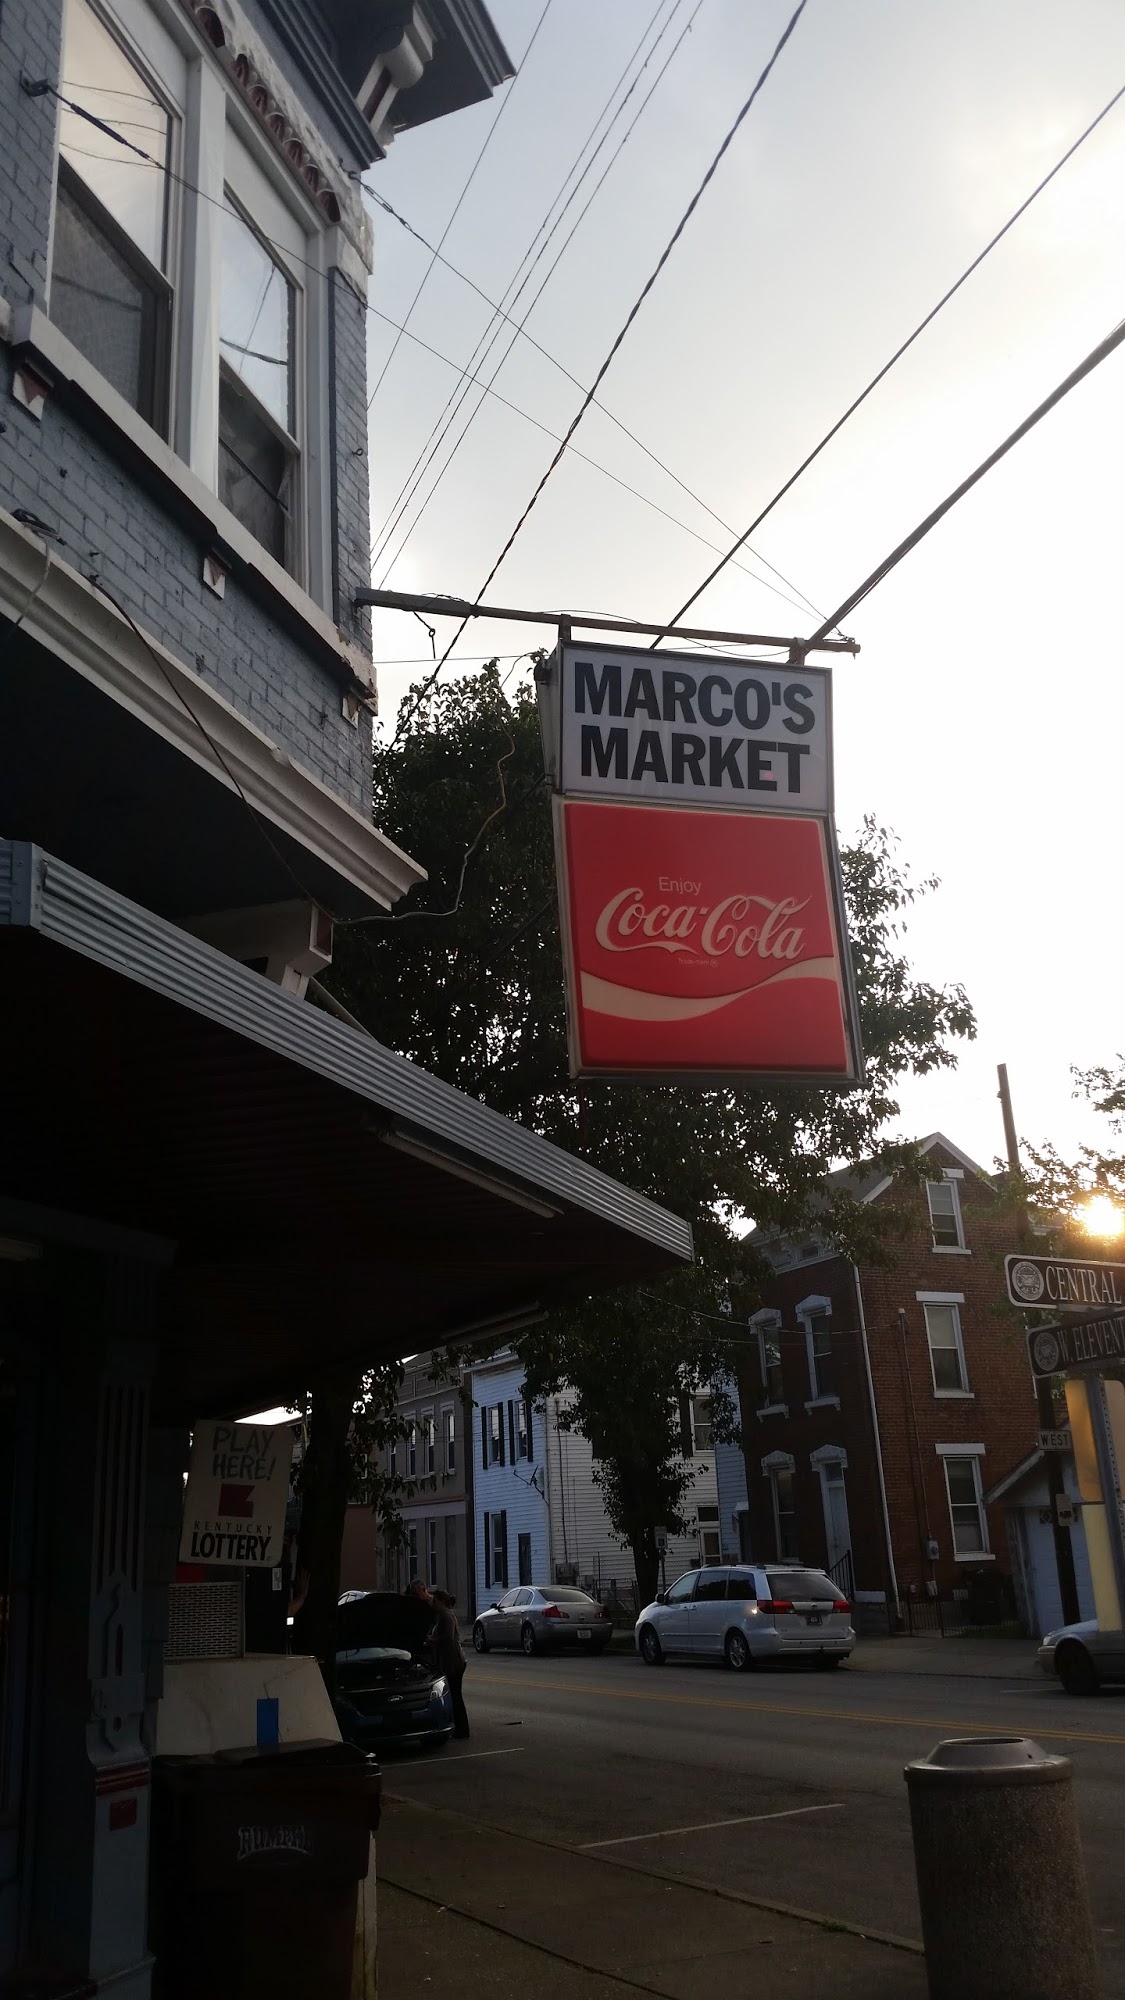 Marco's Market